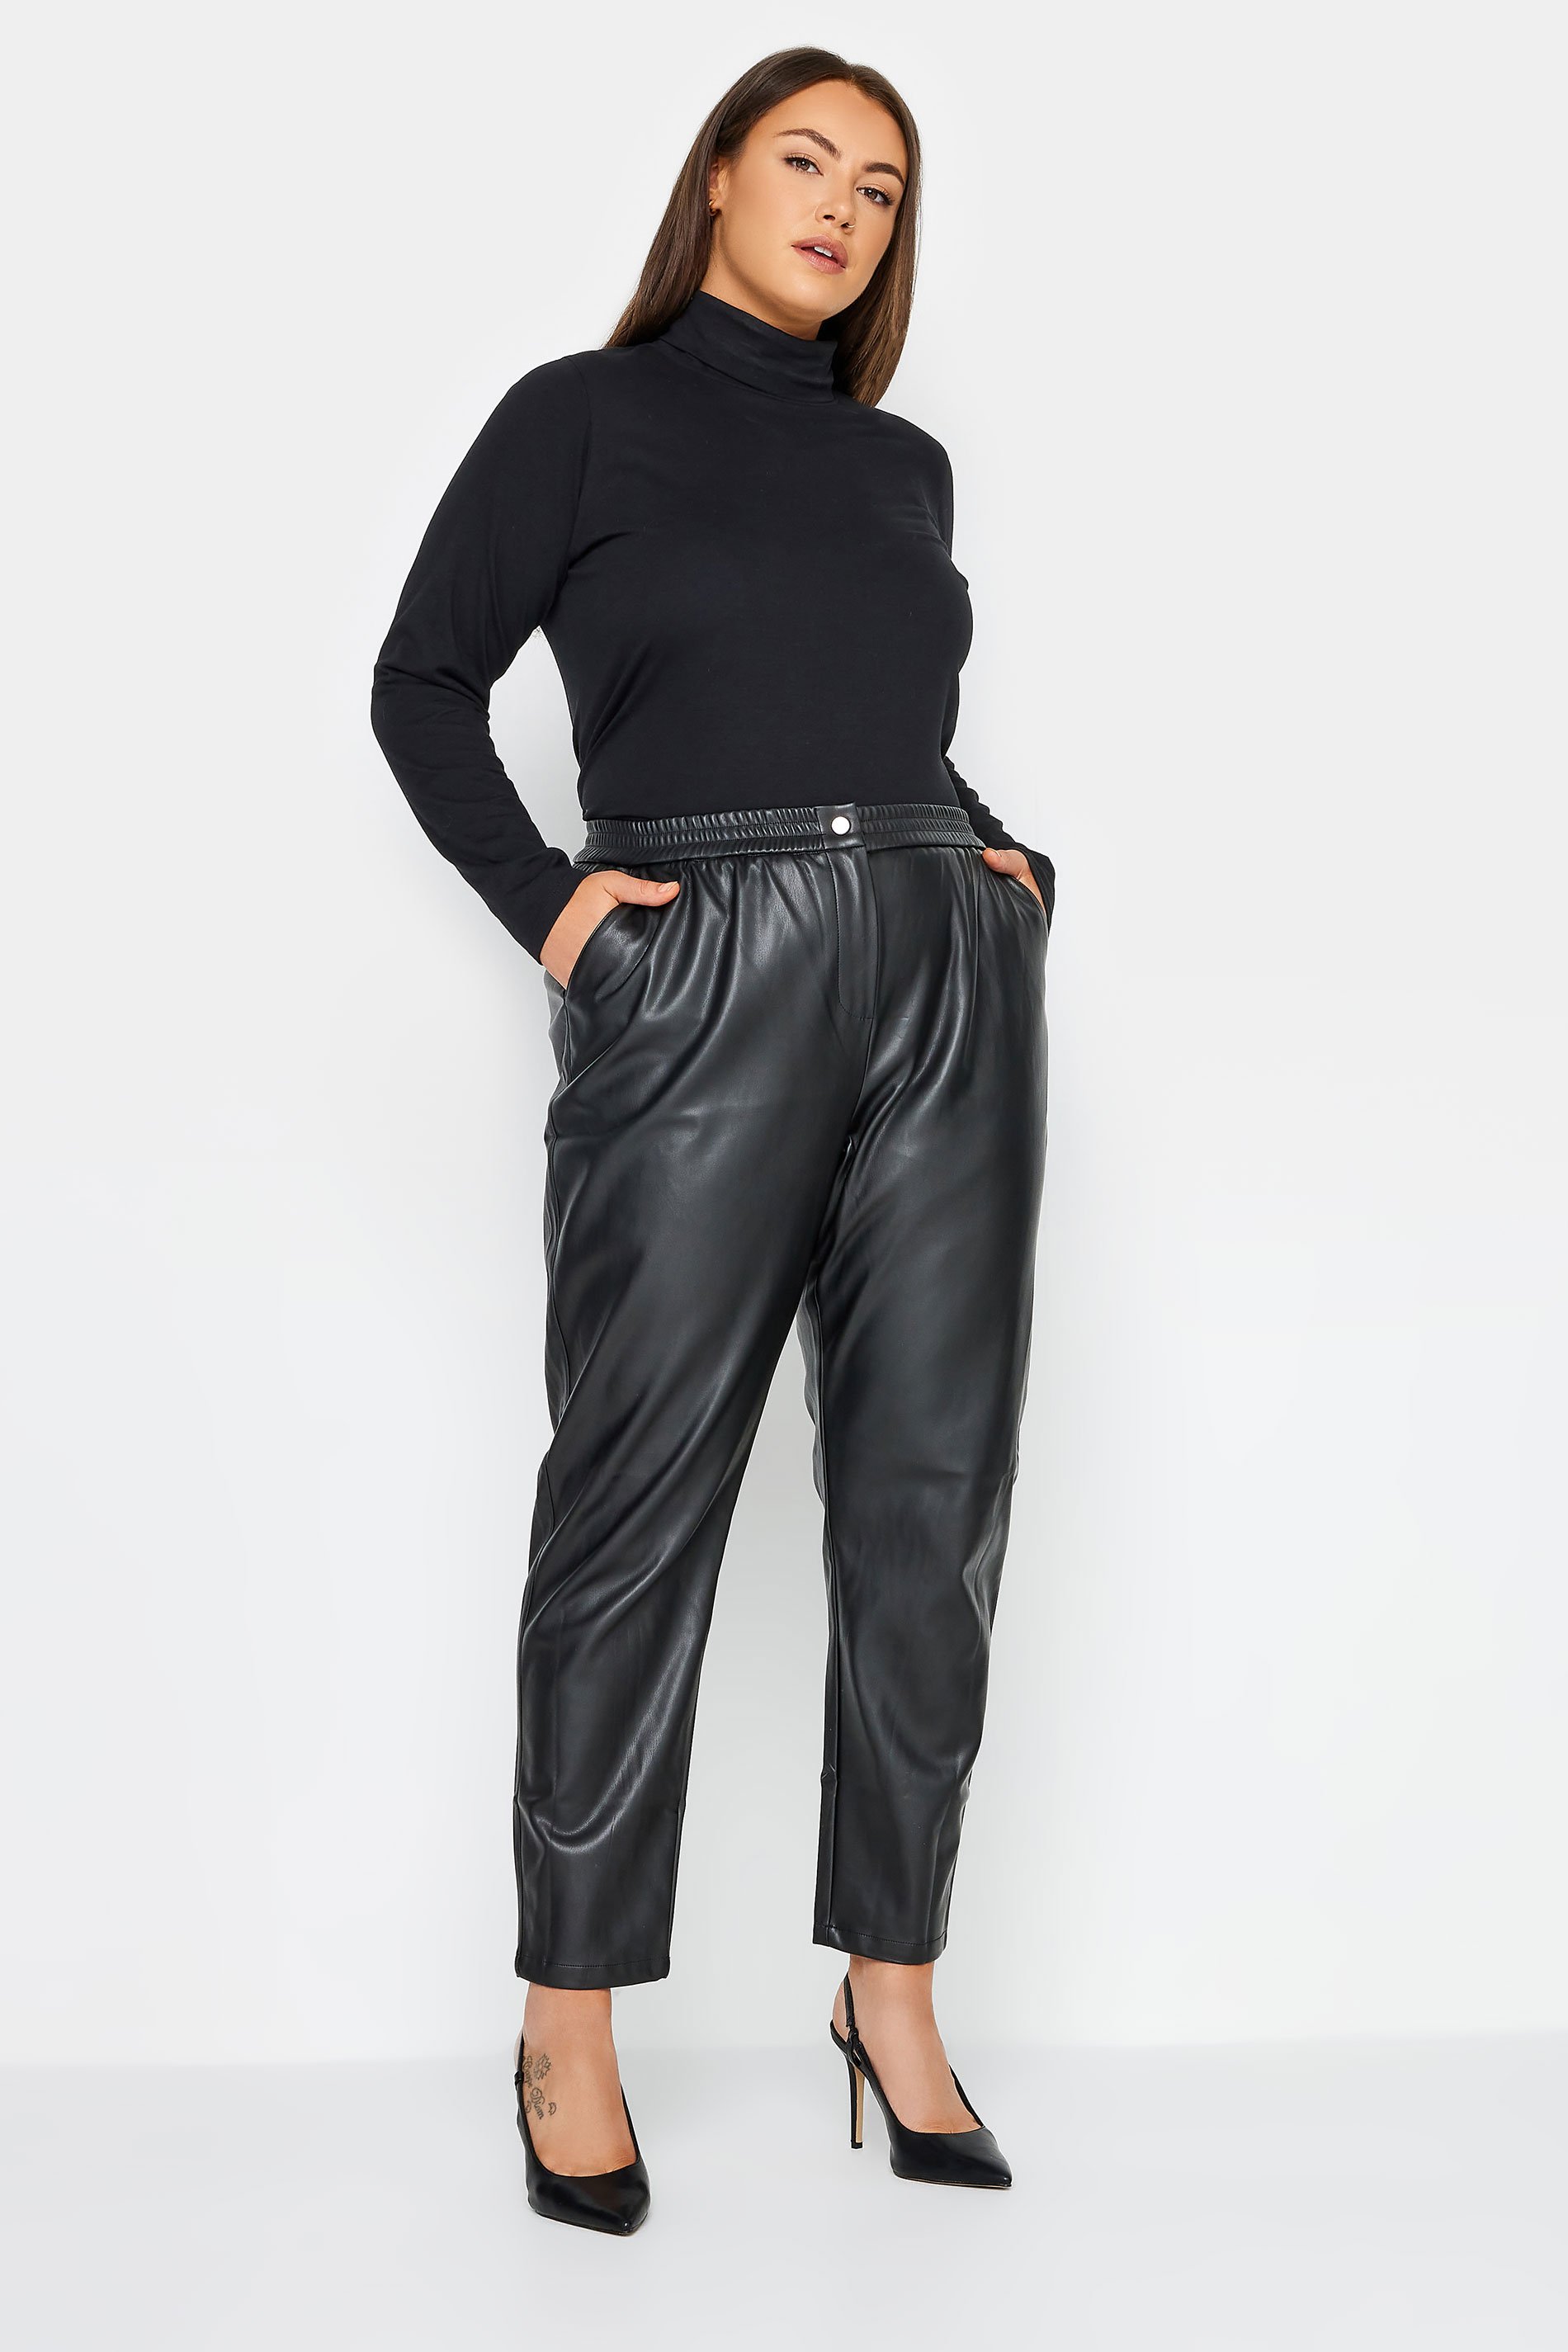 City Chic Black Vegan Leather Trousers 2